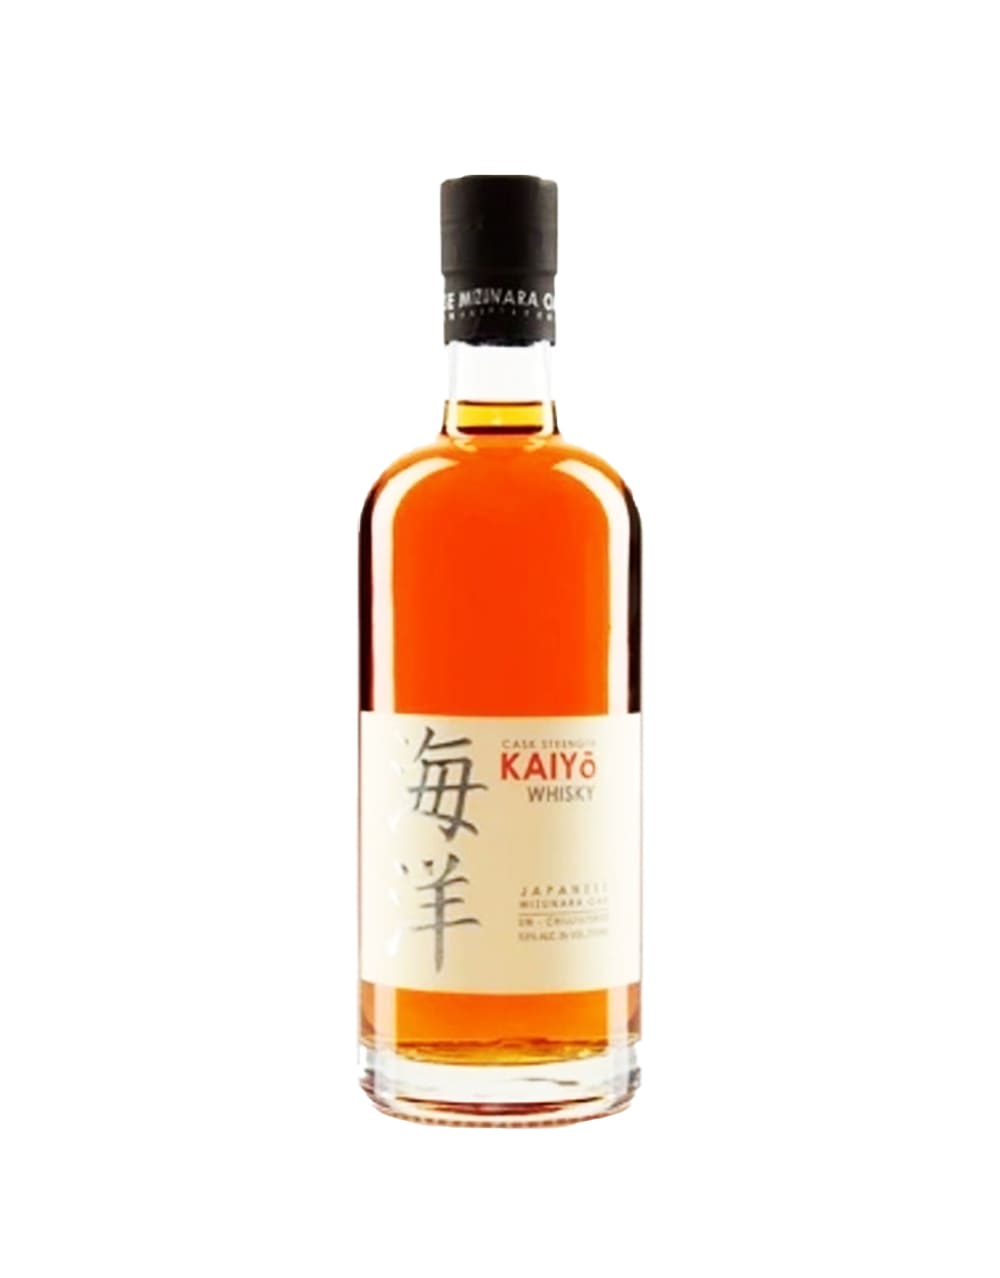 Kaiyo Mizunara Oak Aged Cask Strength Whisky